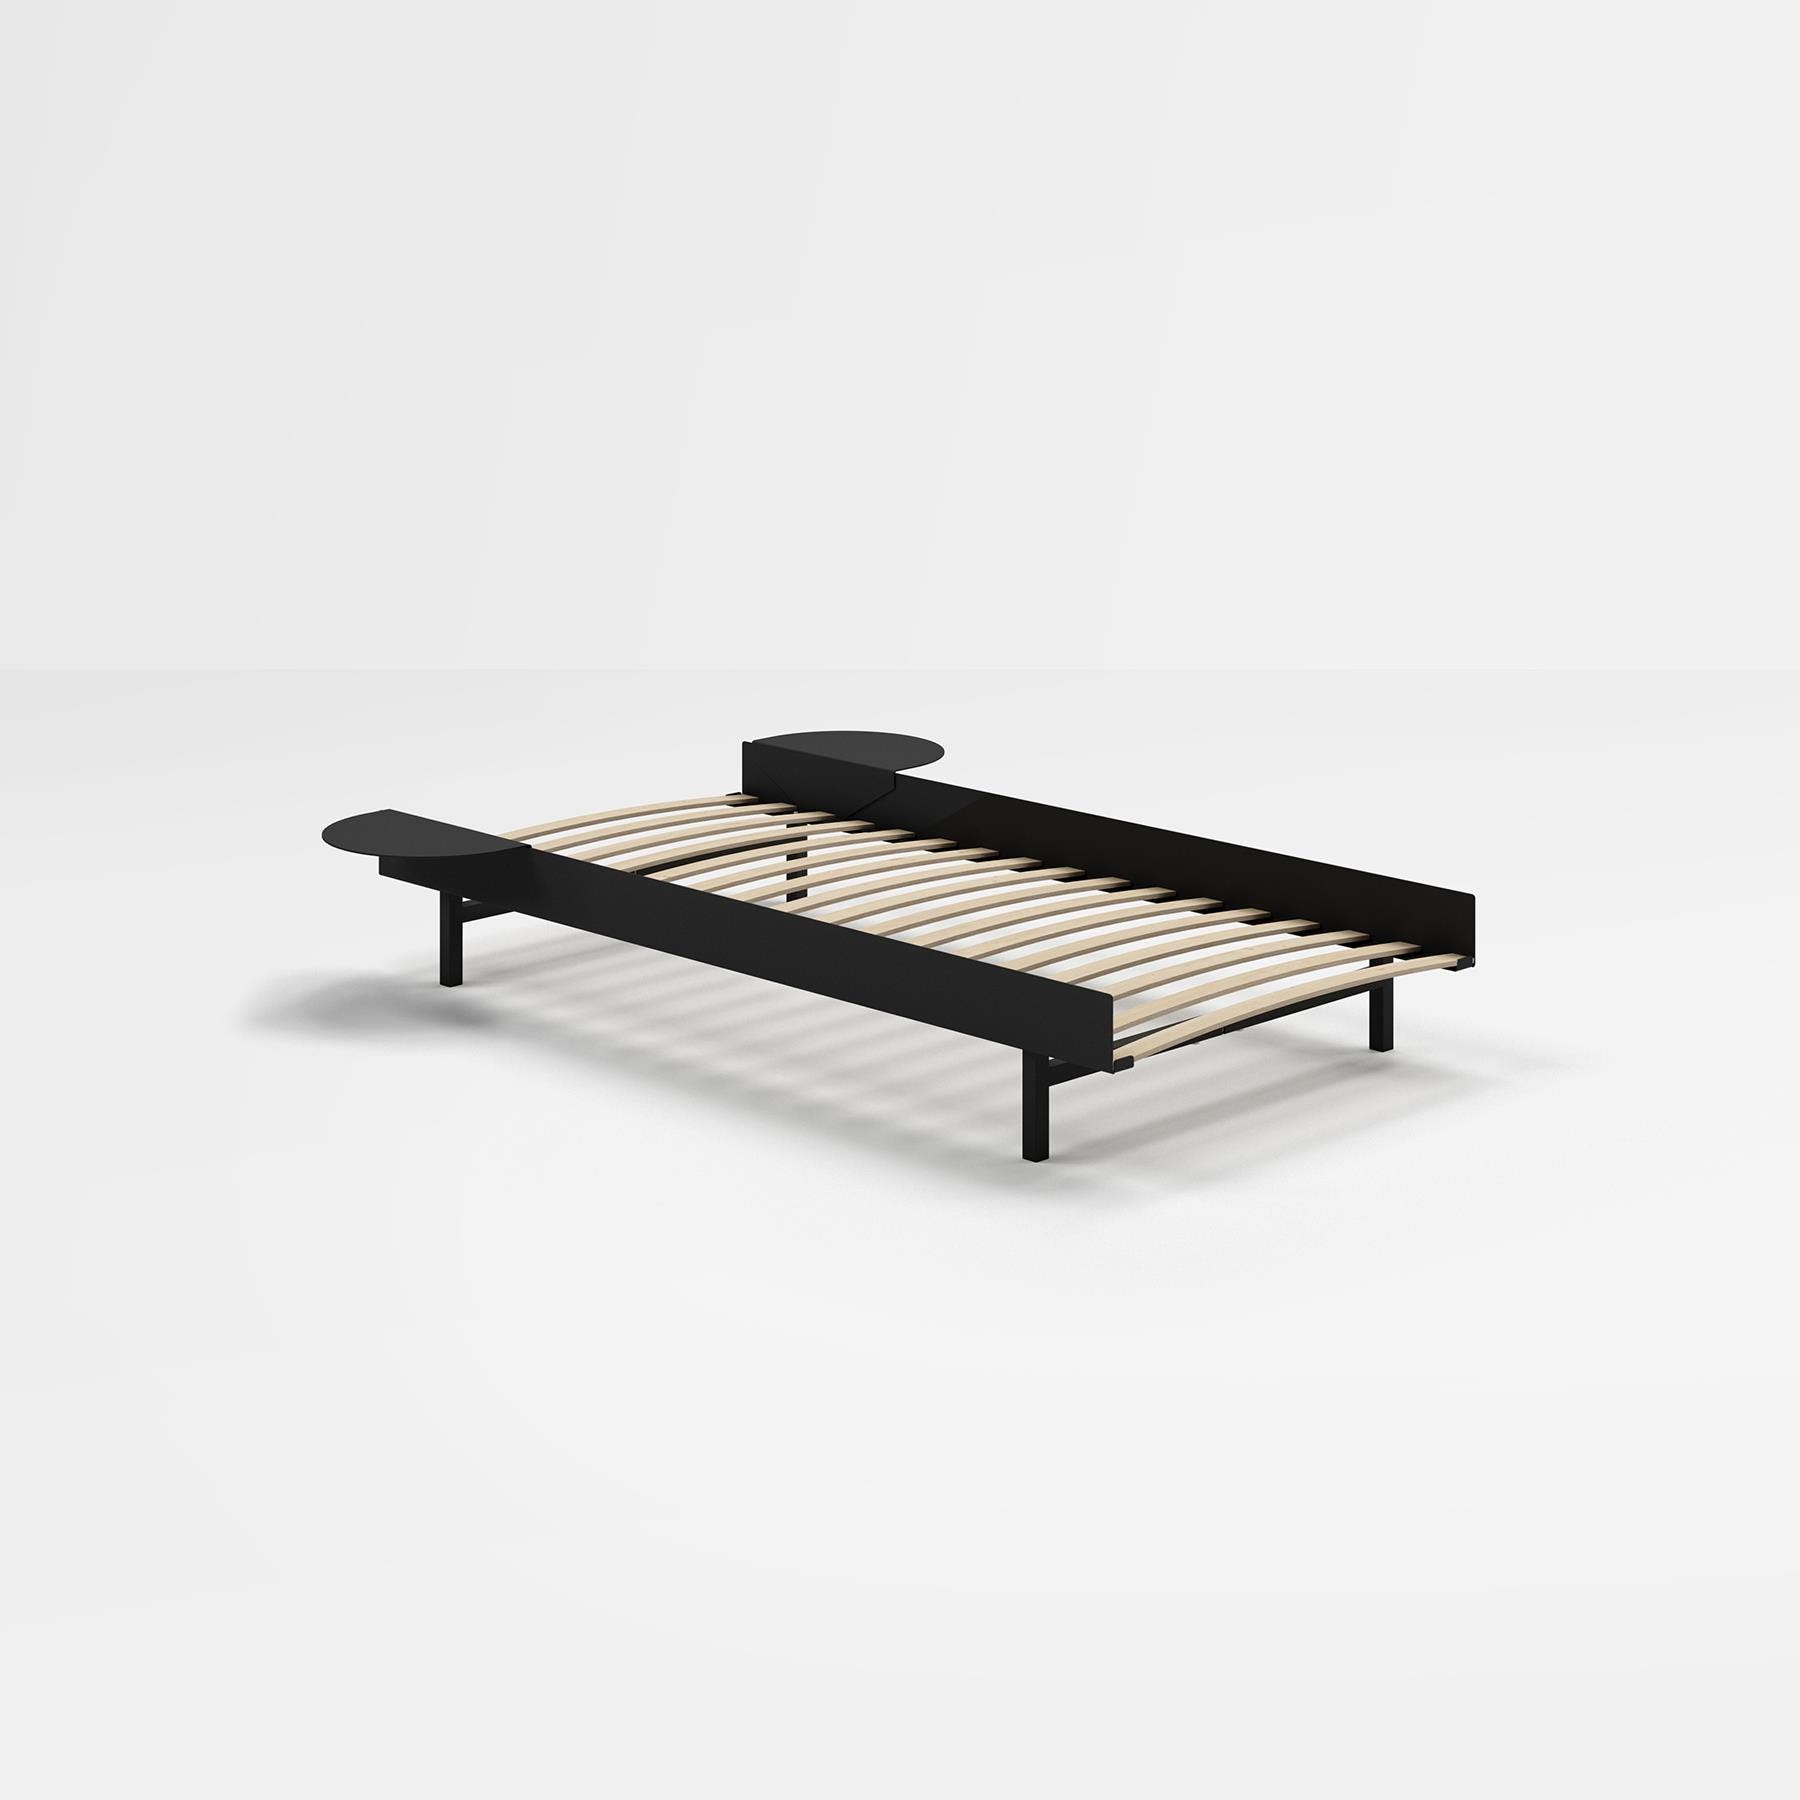 Moebe Bed Single Black 2 Side Tables Black Designer Furniture From Holloways Of Ludlow